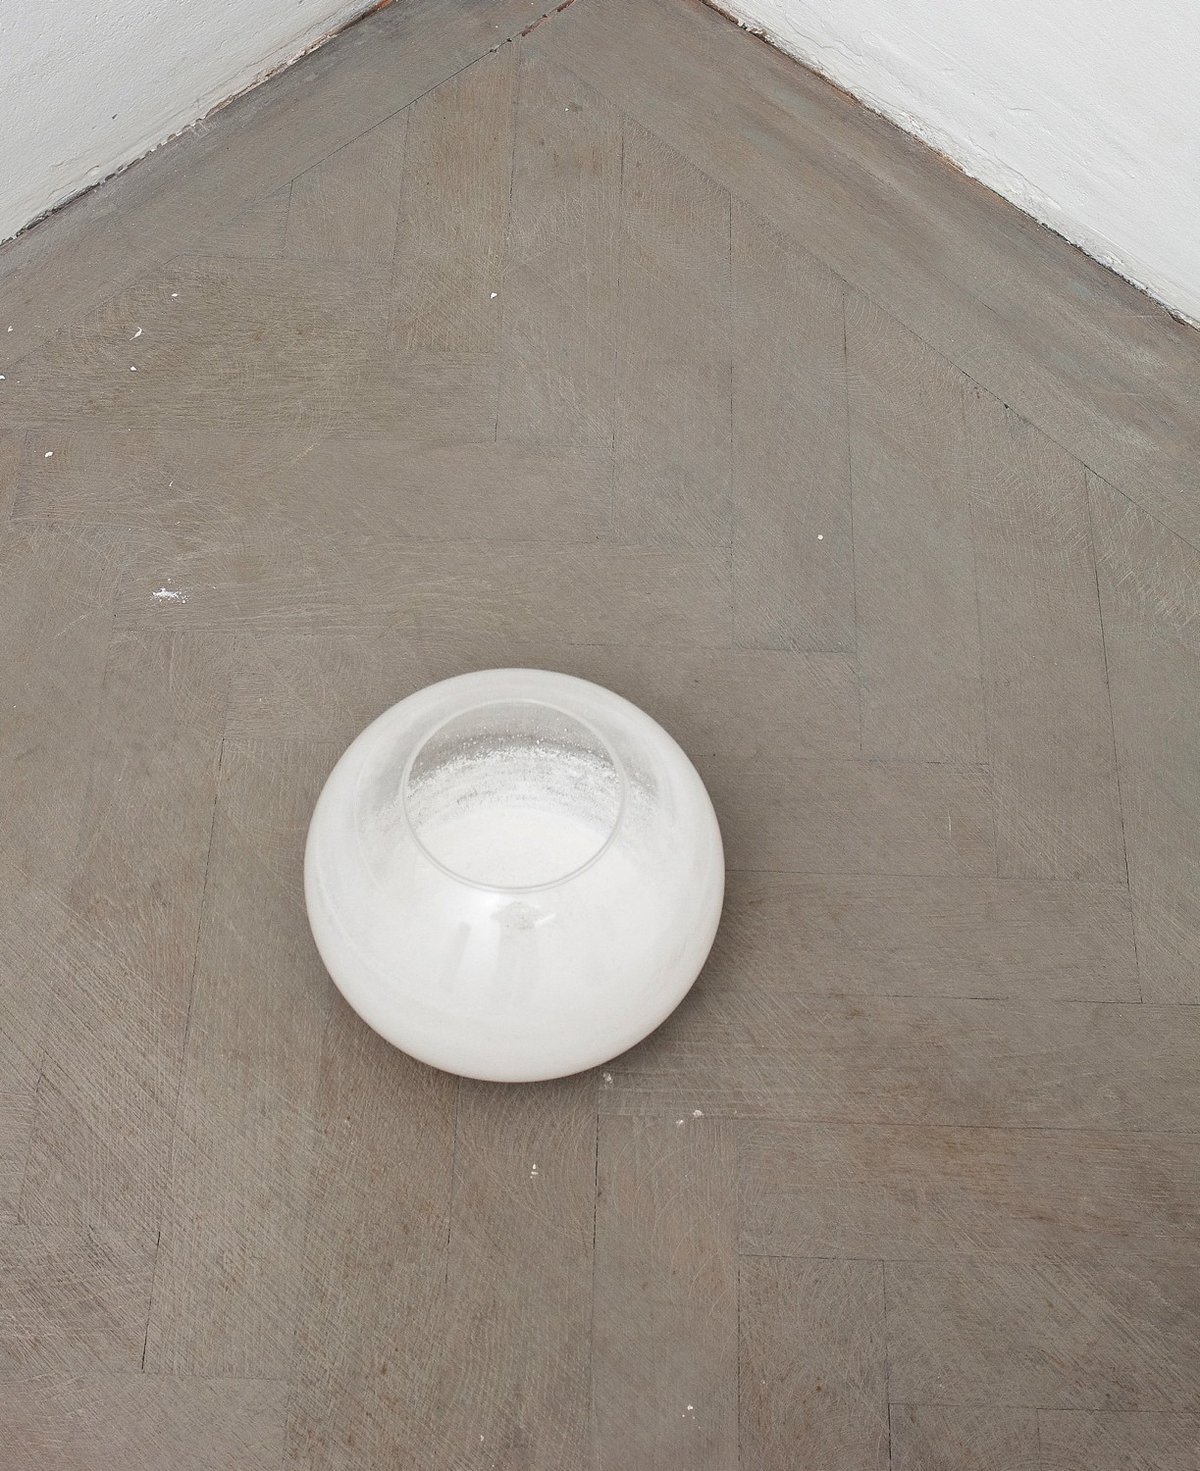 Giovanni ObertiUntitled (Sphere, Limestone), 2012Glass bowl, water, limestone25 cm (d)